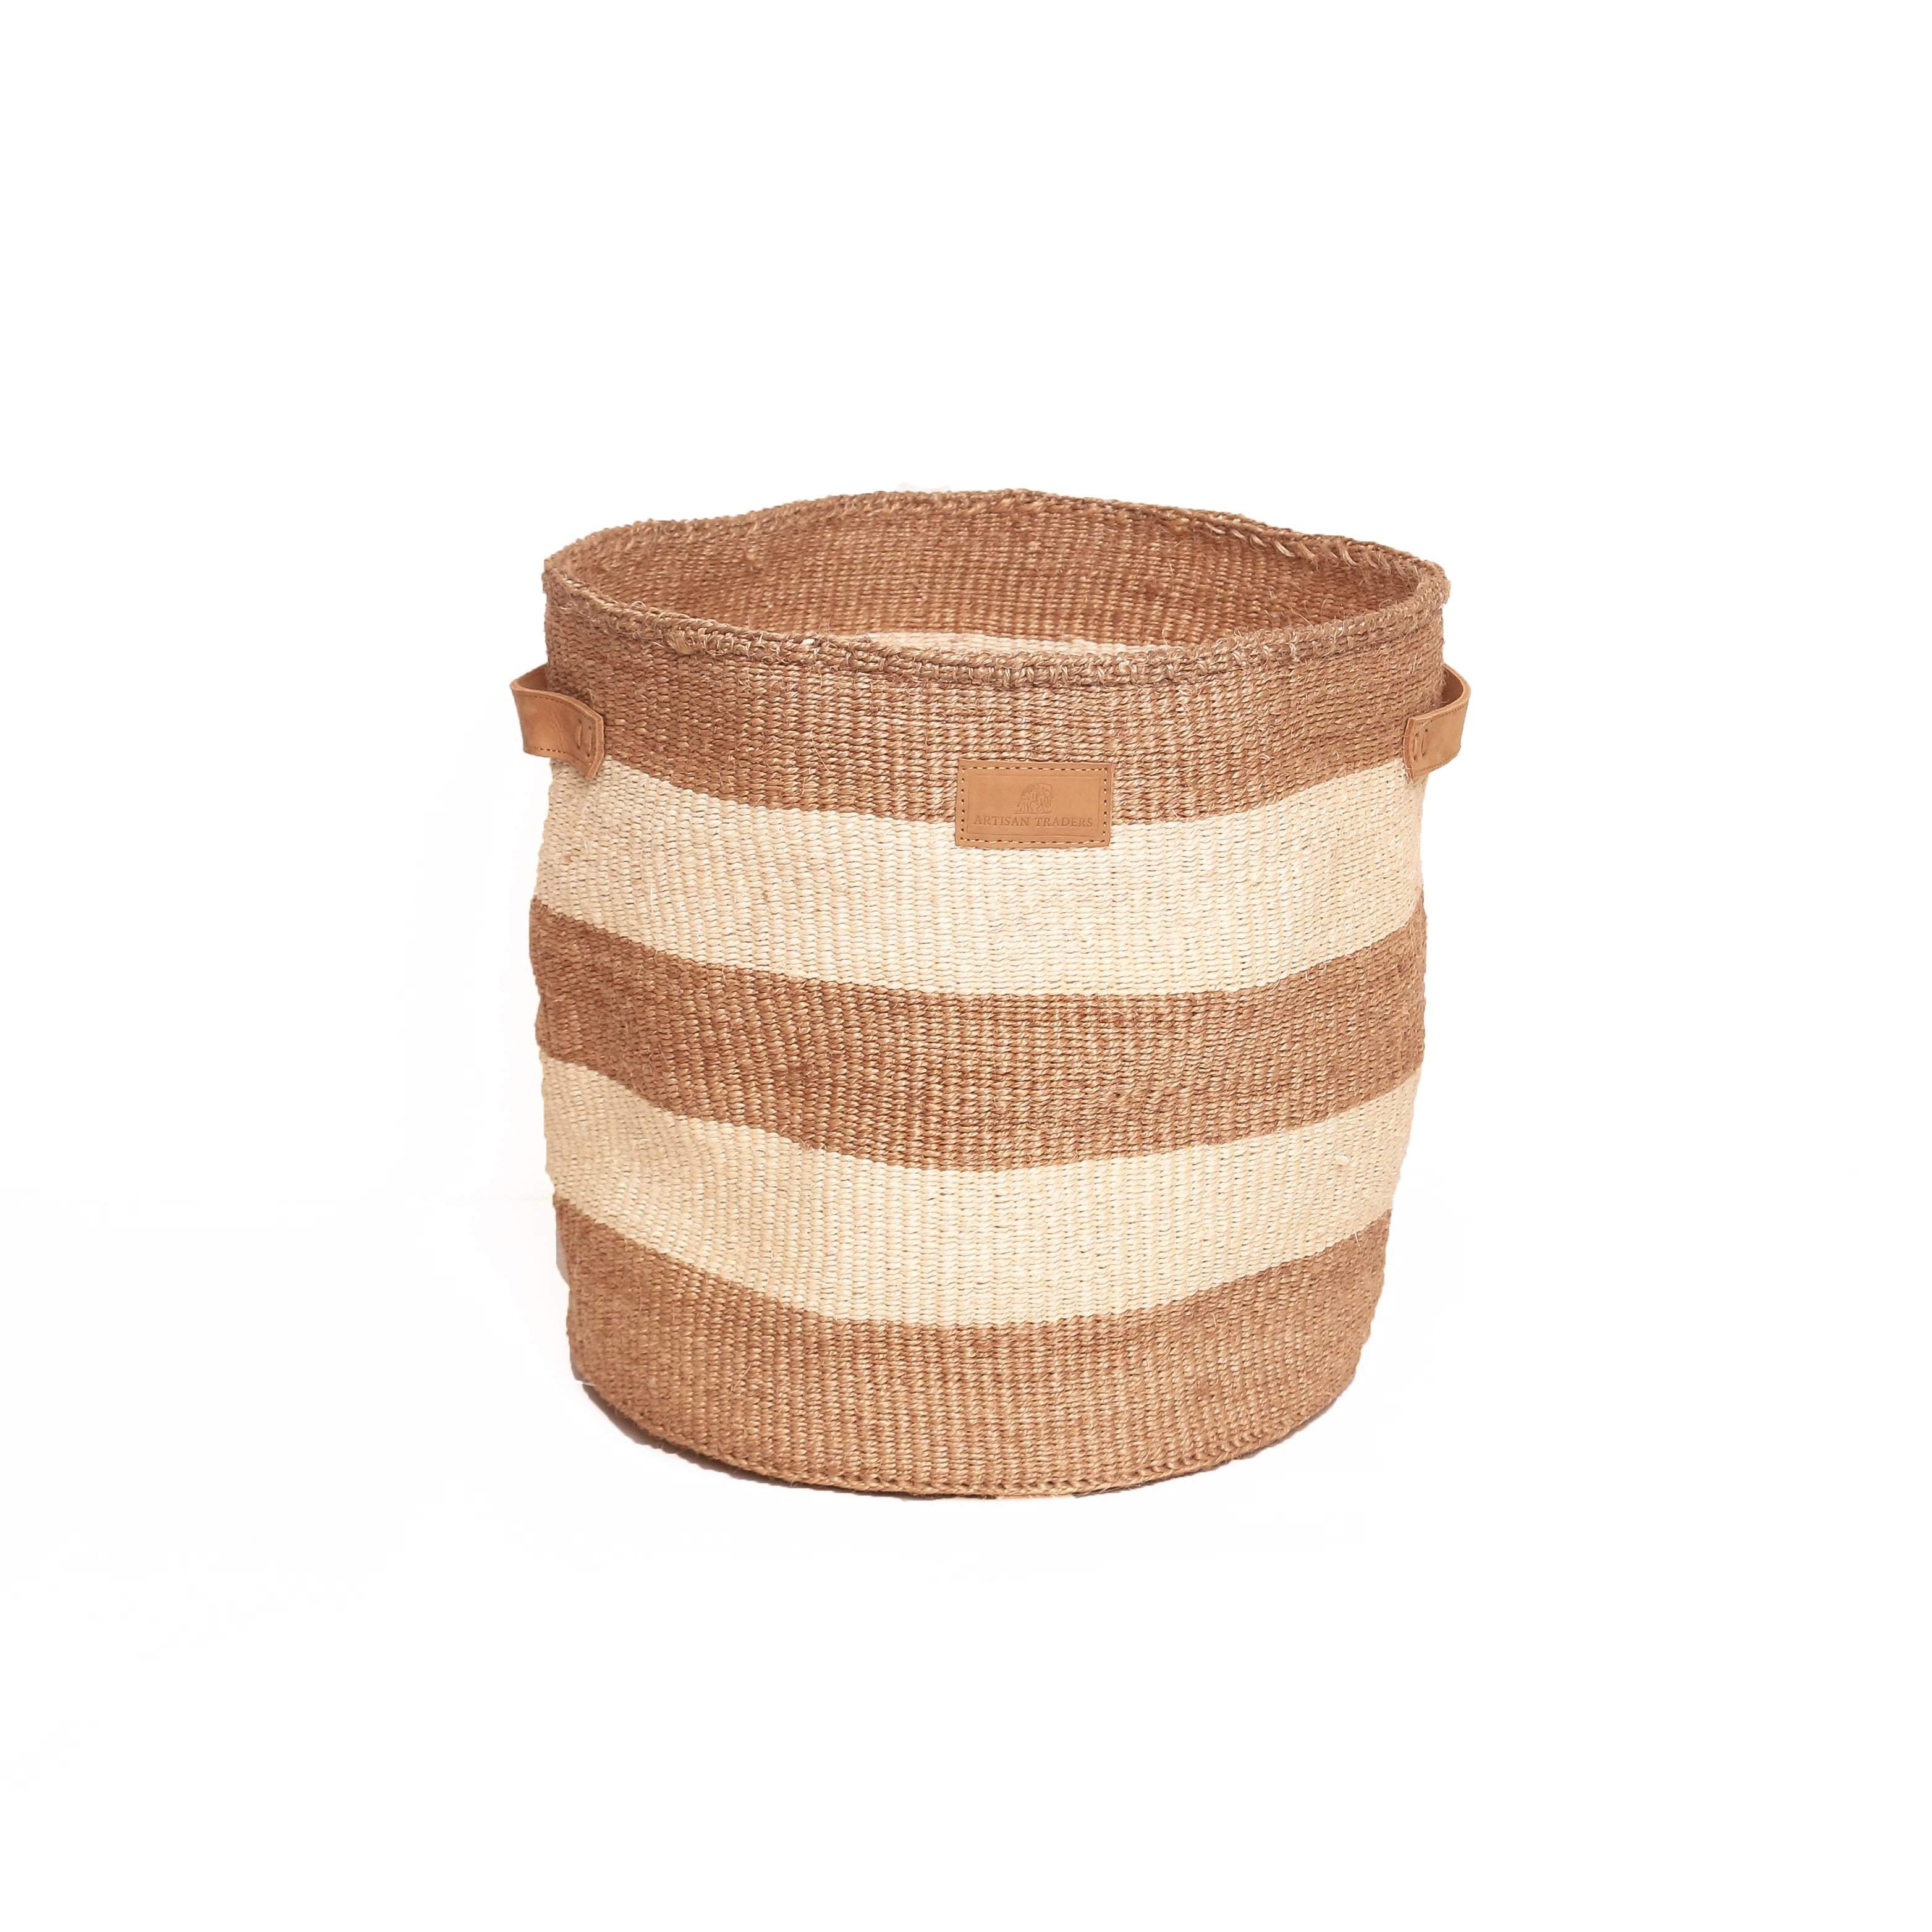 Kiondoo basket Beige Stripe L-Artisan Traders-african,african basket,basket,fairtrade,handcrafted,handmade,kenya,kiondo,kiondoo,natural,sisal